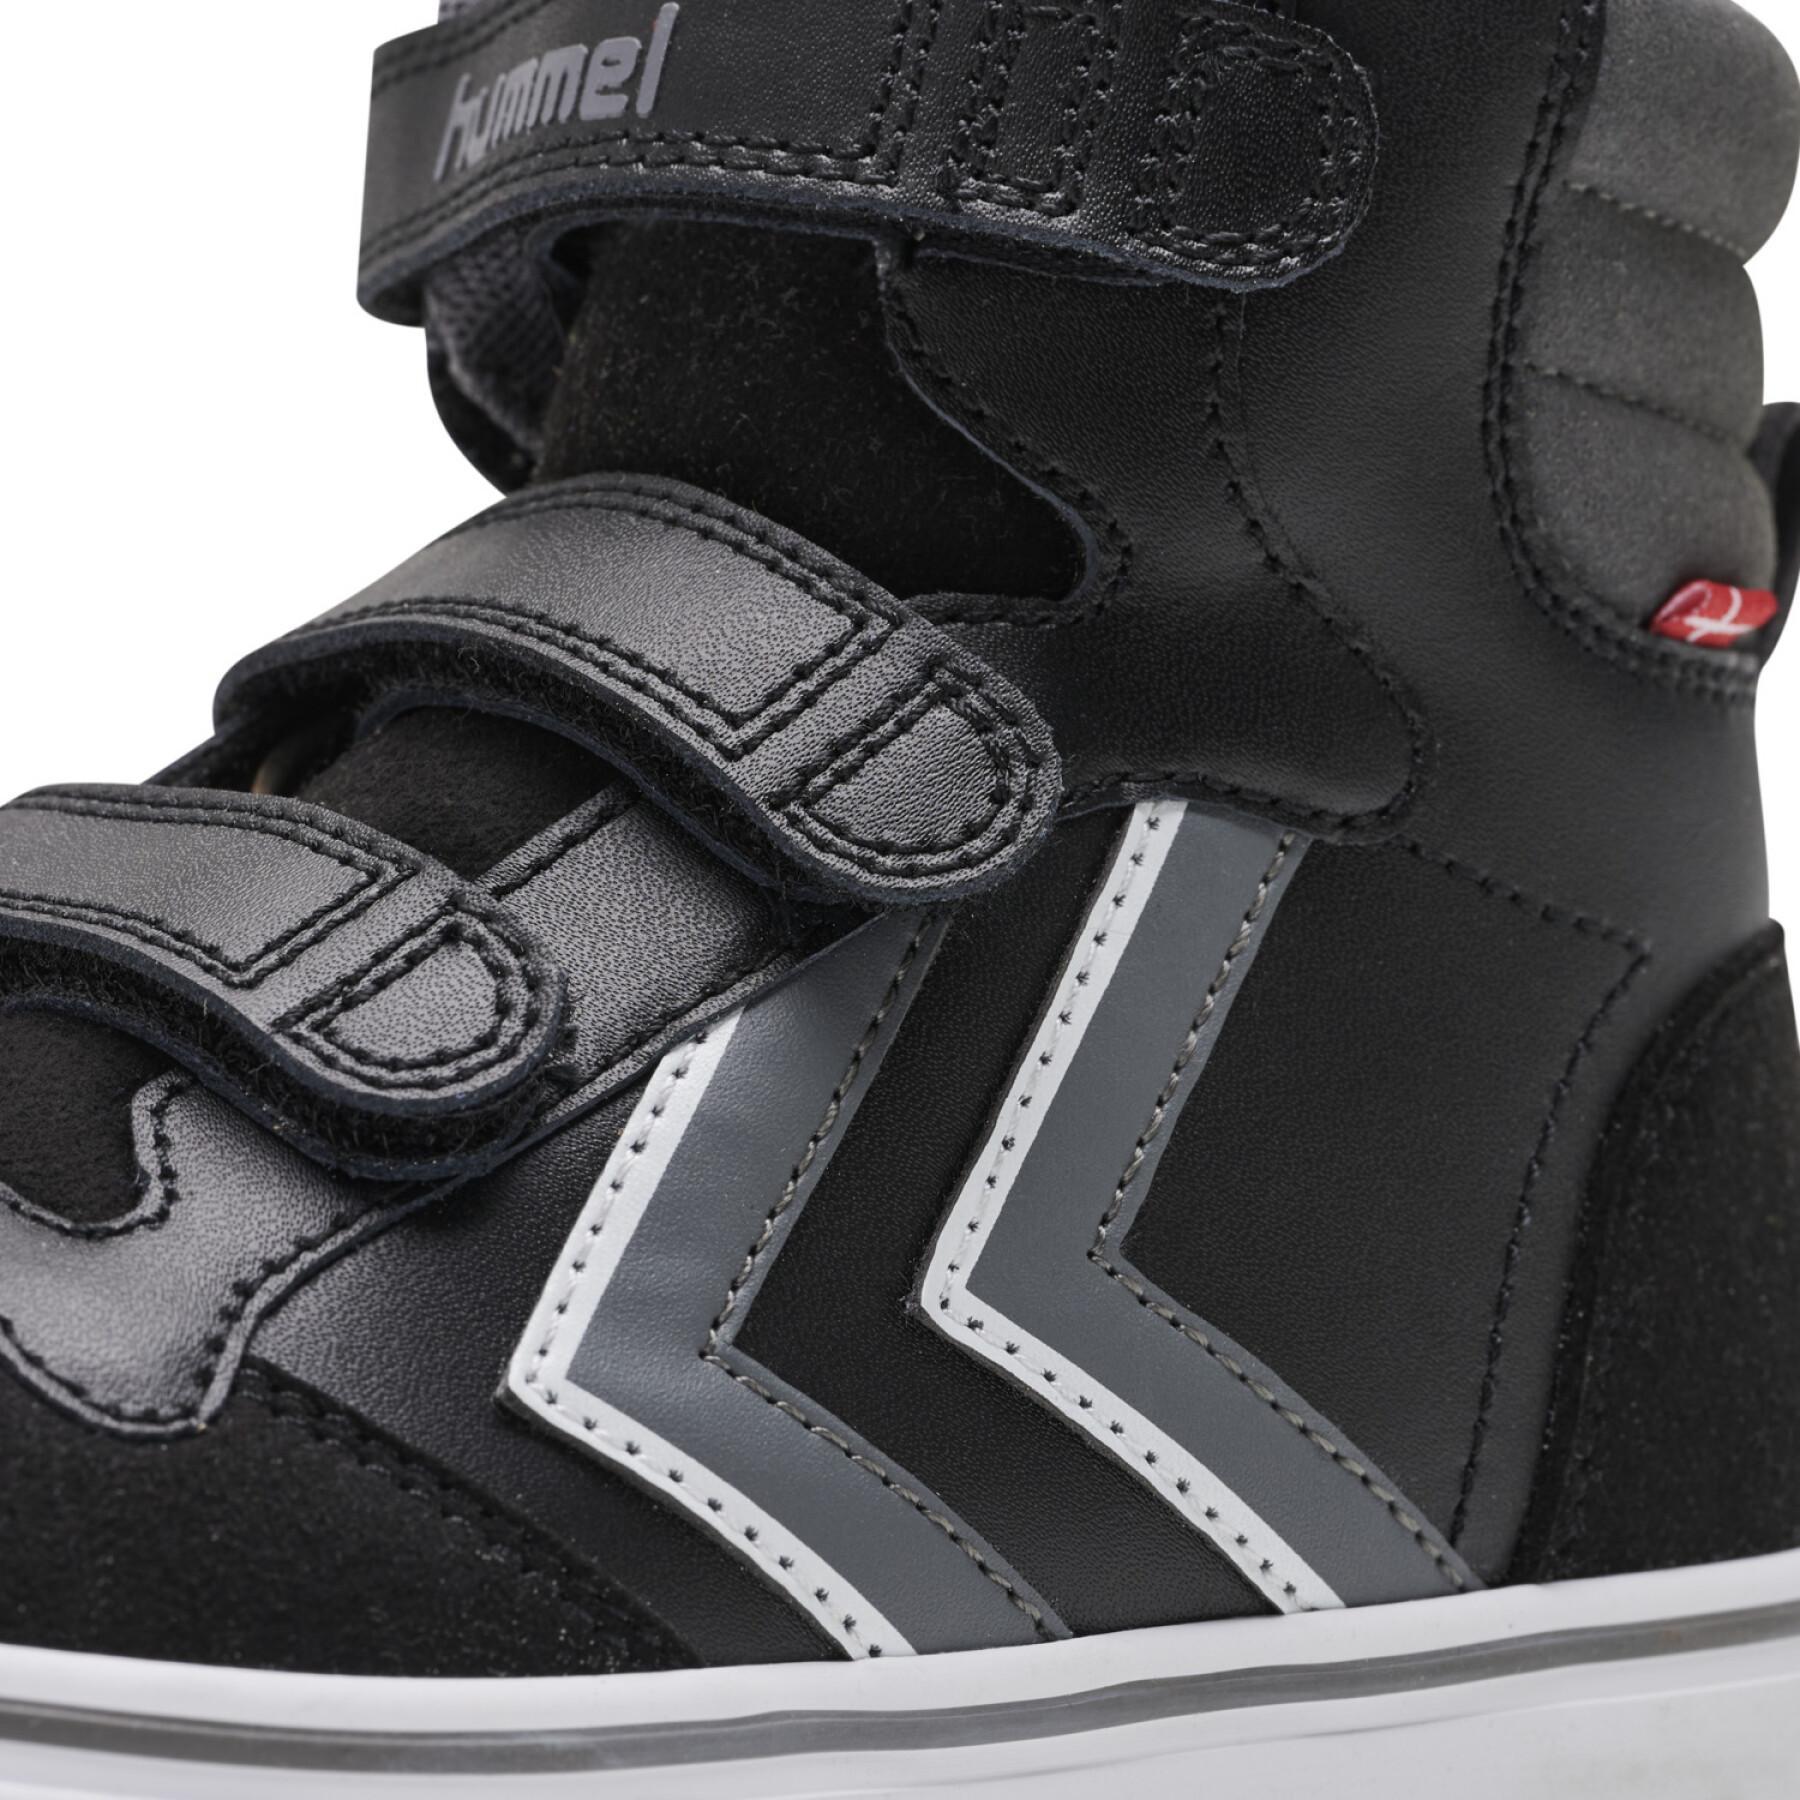 Children's sneakers Hummel Stadil Pro - Brands - Lifestyle